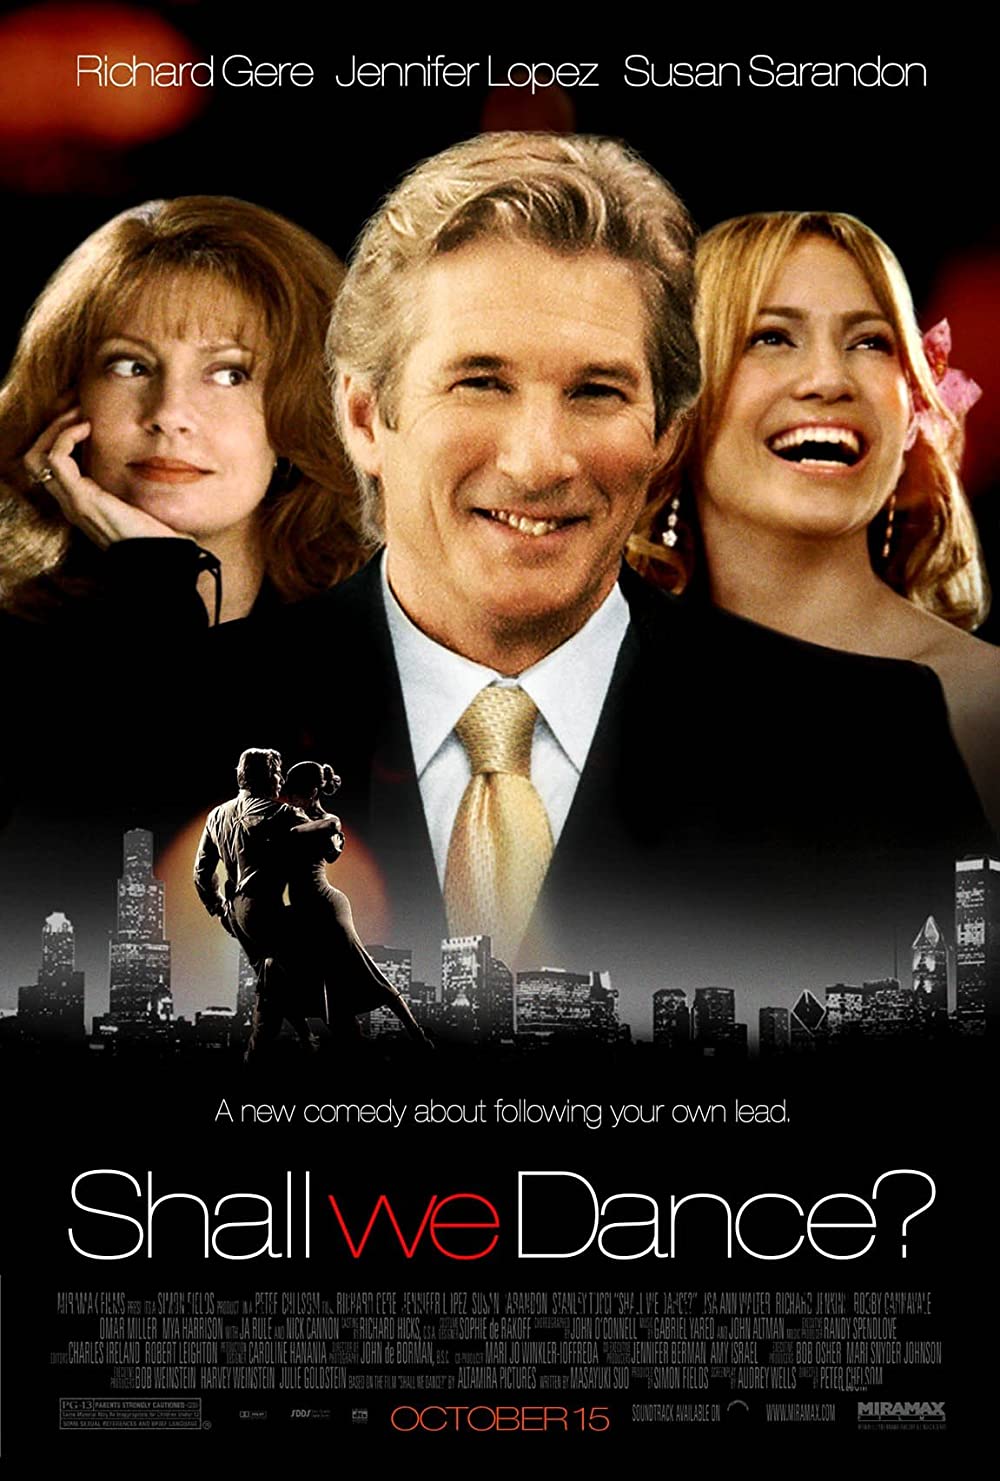 Filmbeschreibung zu Shall We Dance?